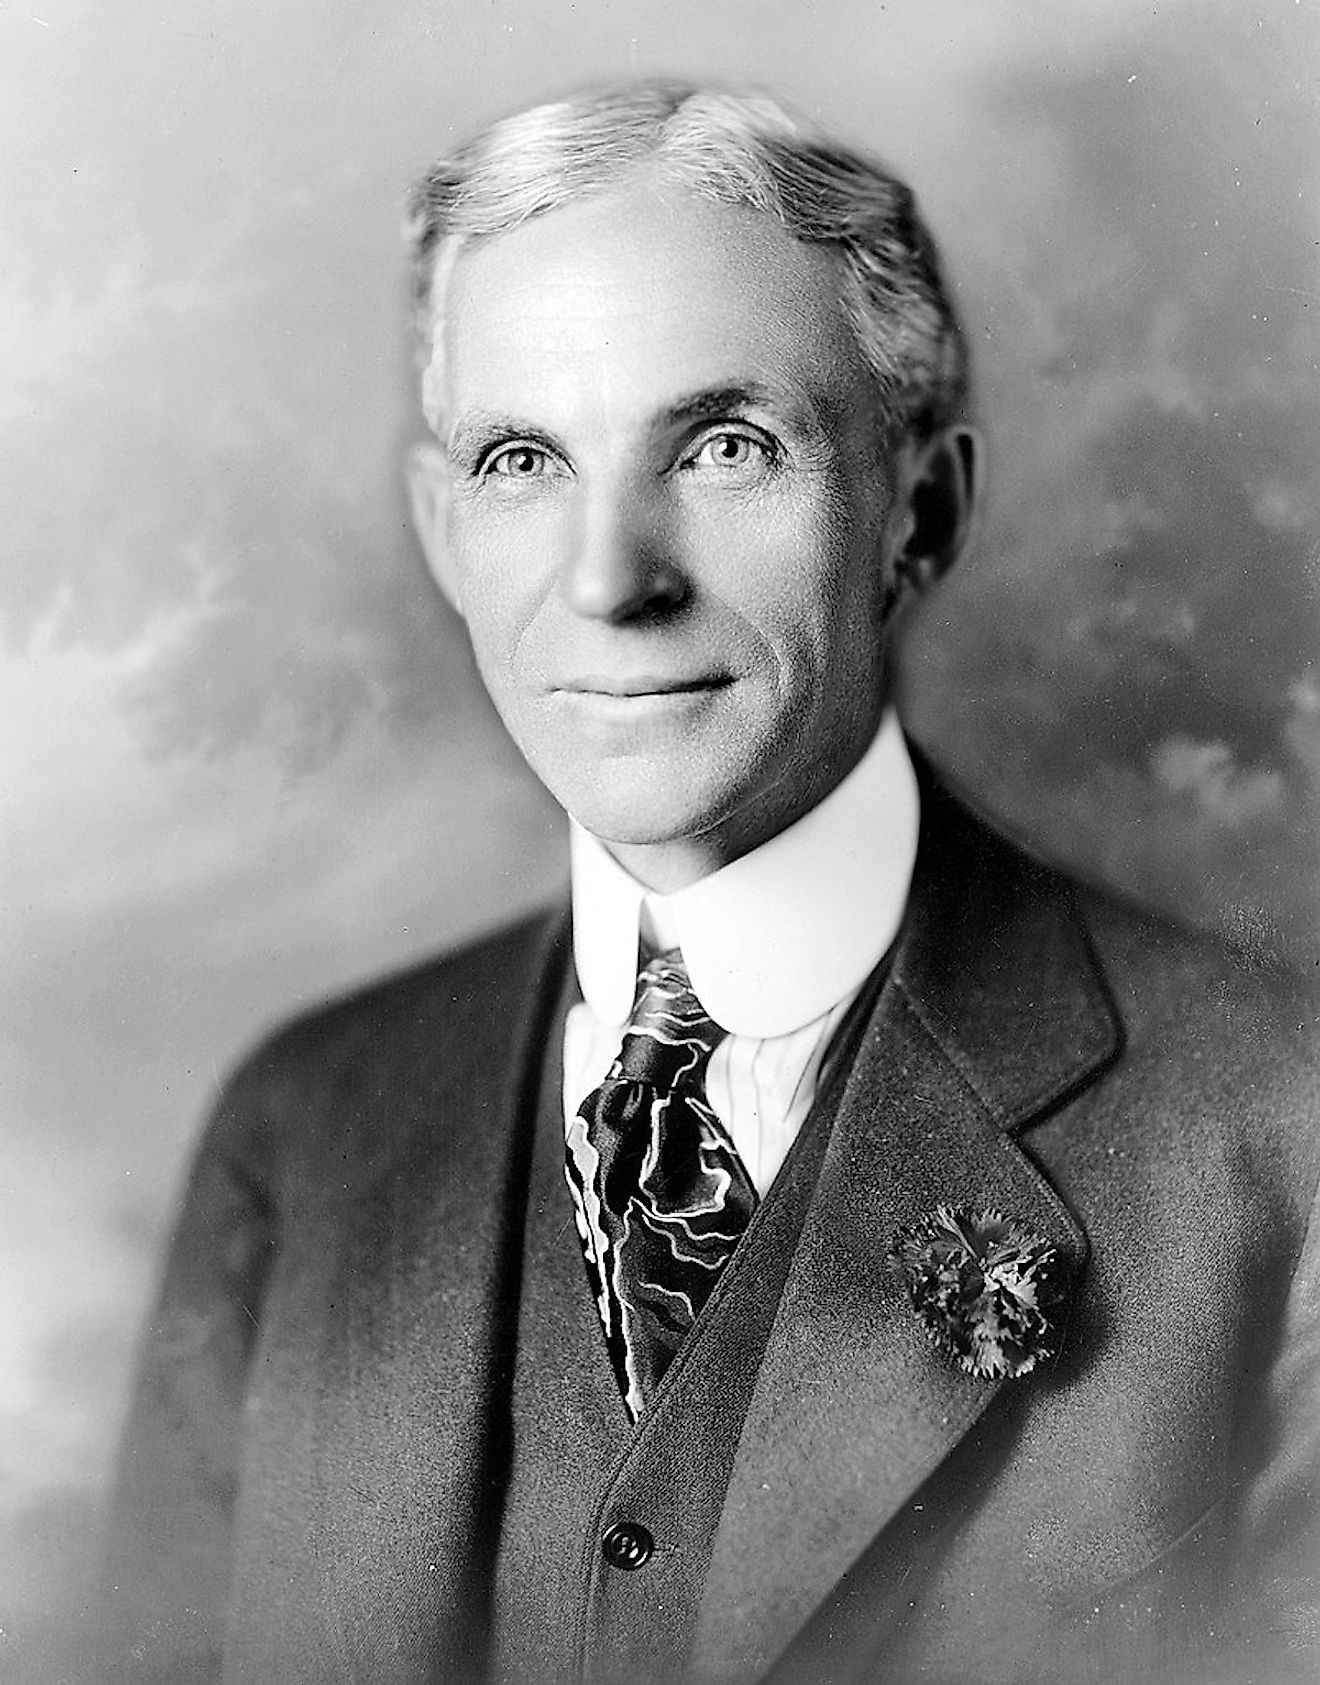 Portrait of Henry Ford. Image credit: Hartsook/Public domain